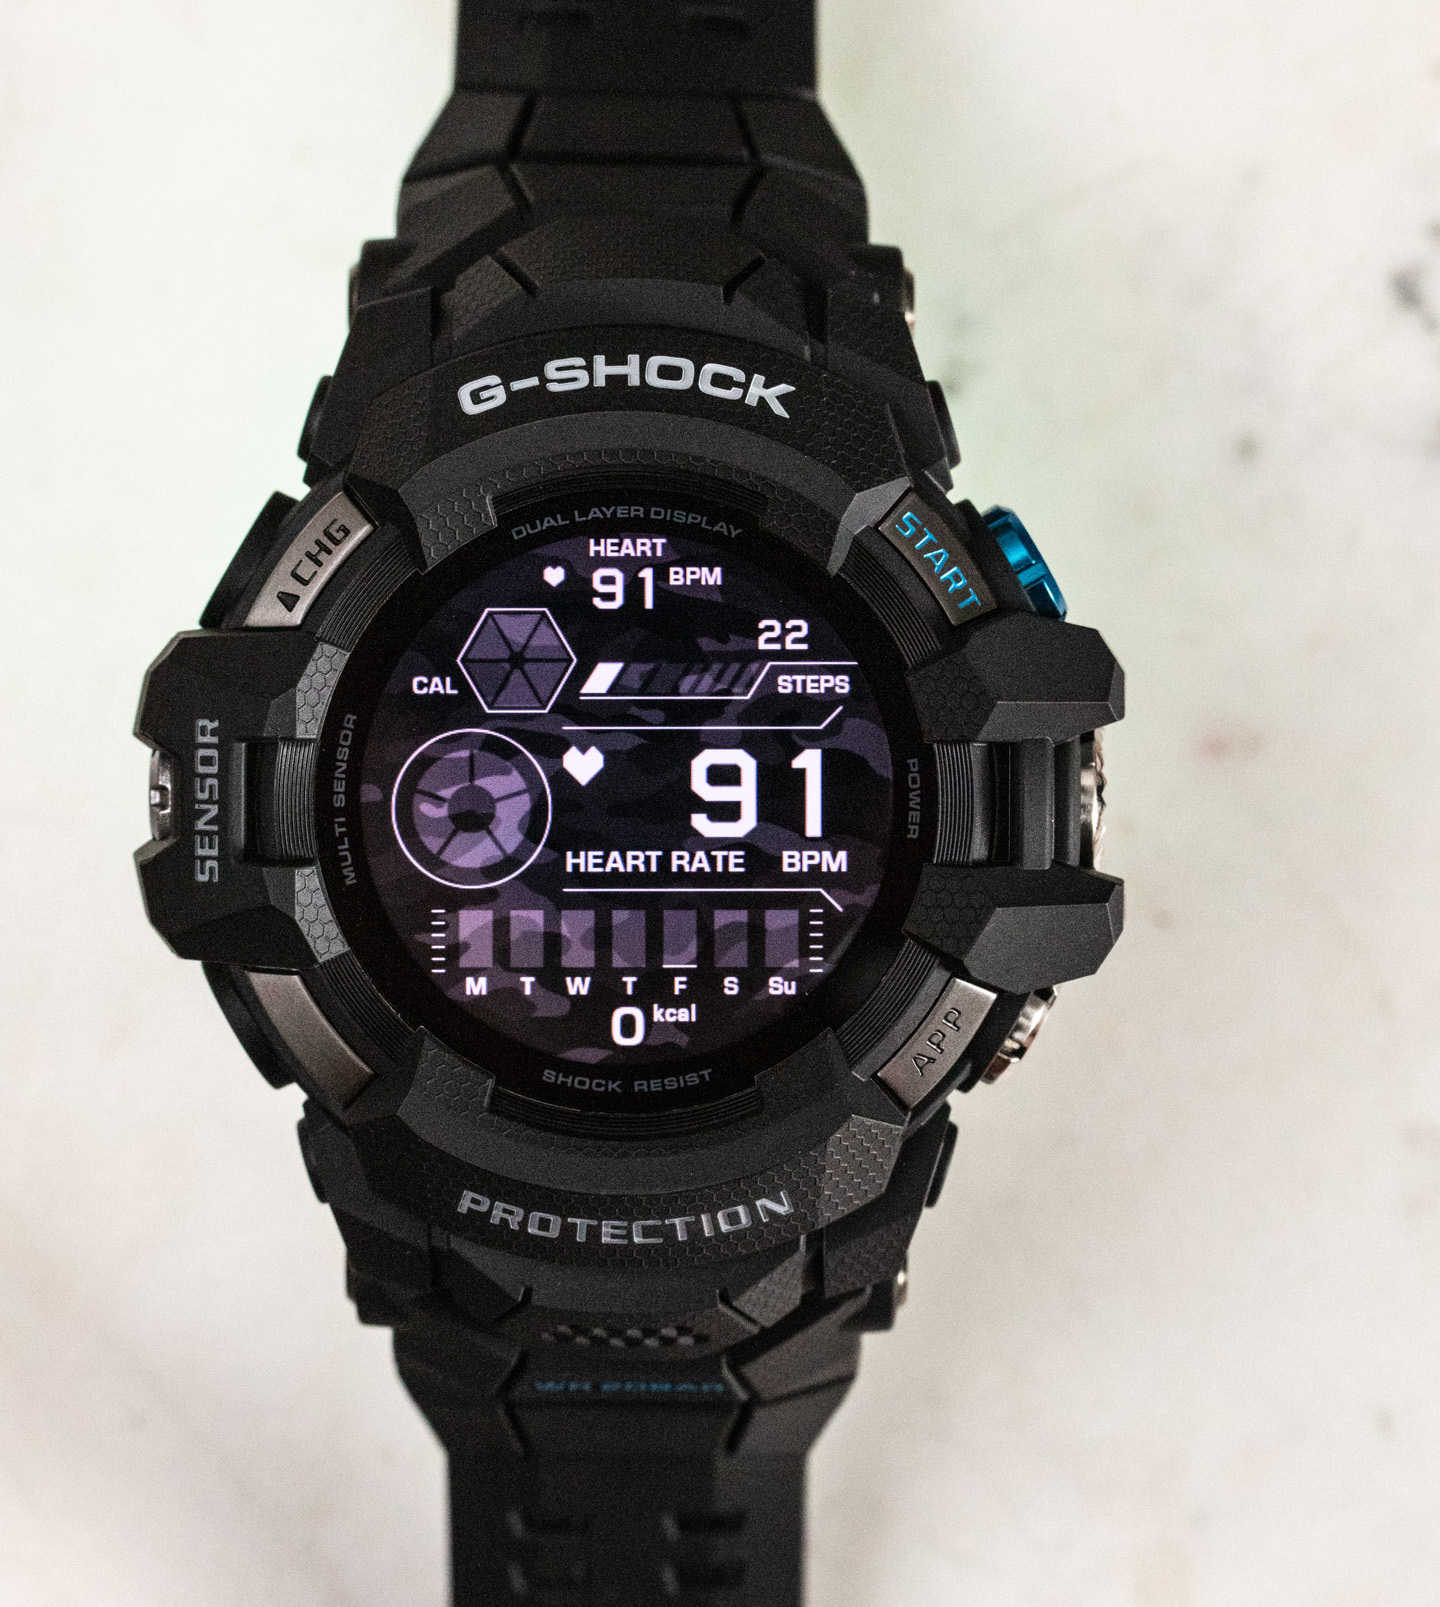 Watch Review: Casio G-Shock GSWH1000 Wear OS Smartwatch